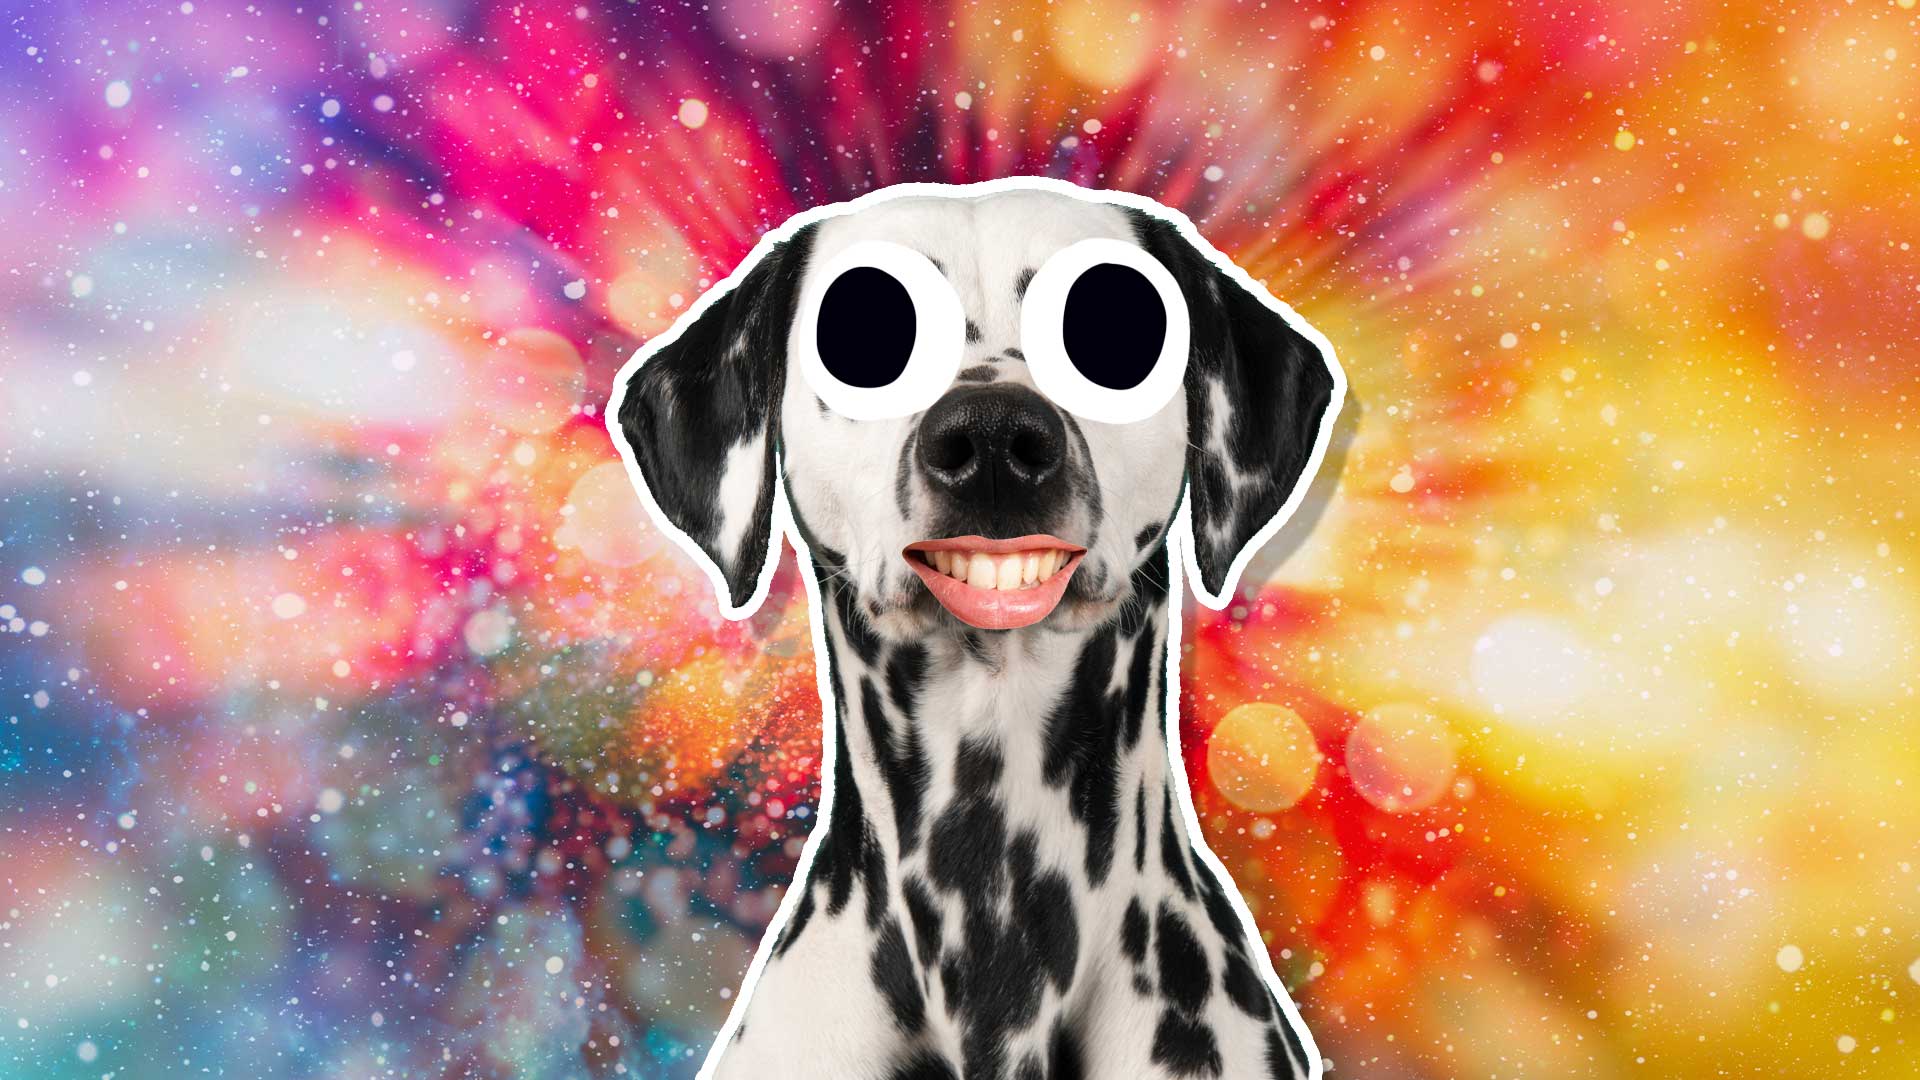 A Dalmatian dog